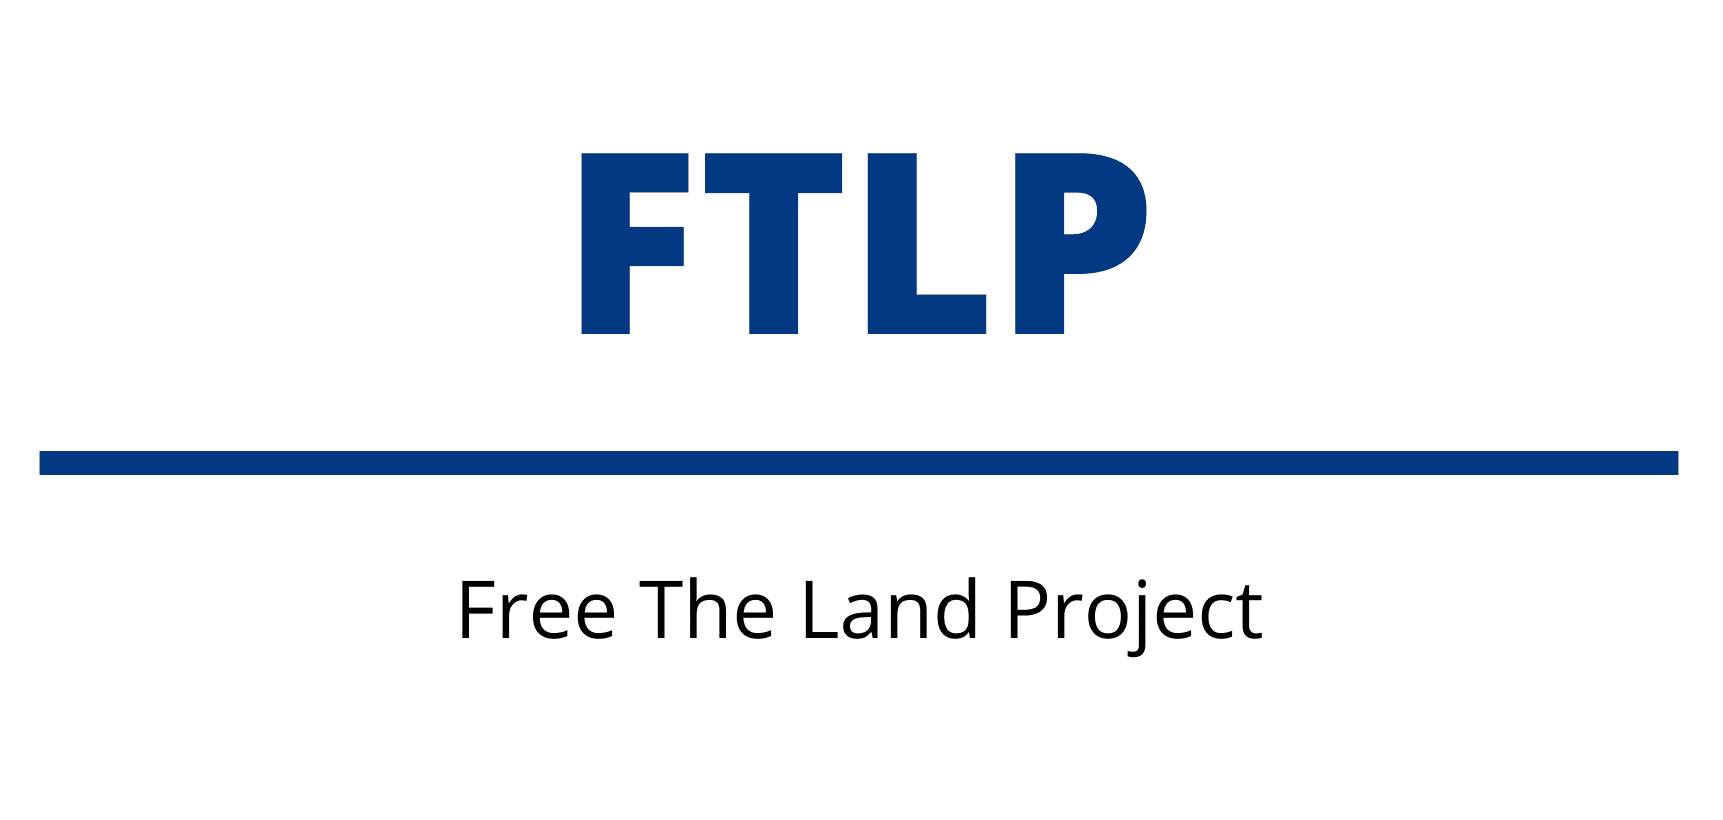 FTLP (Free The Land Project) SLP Logo